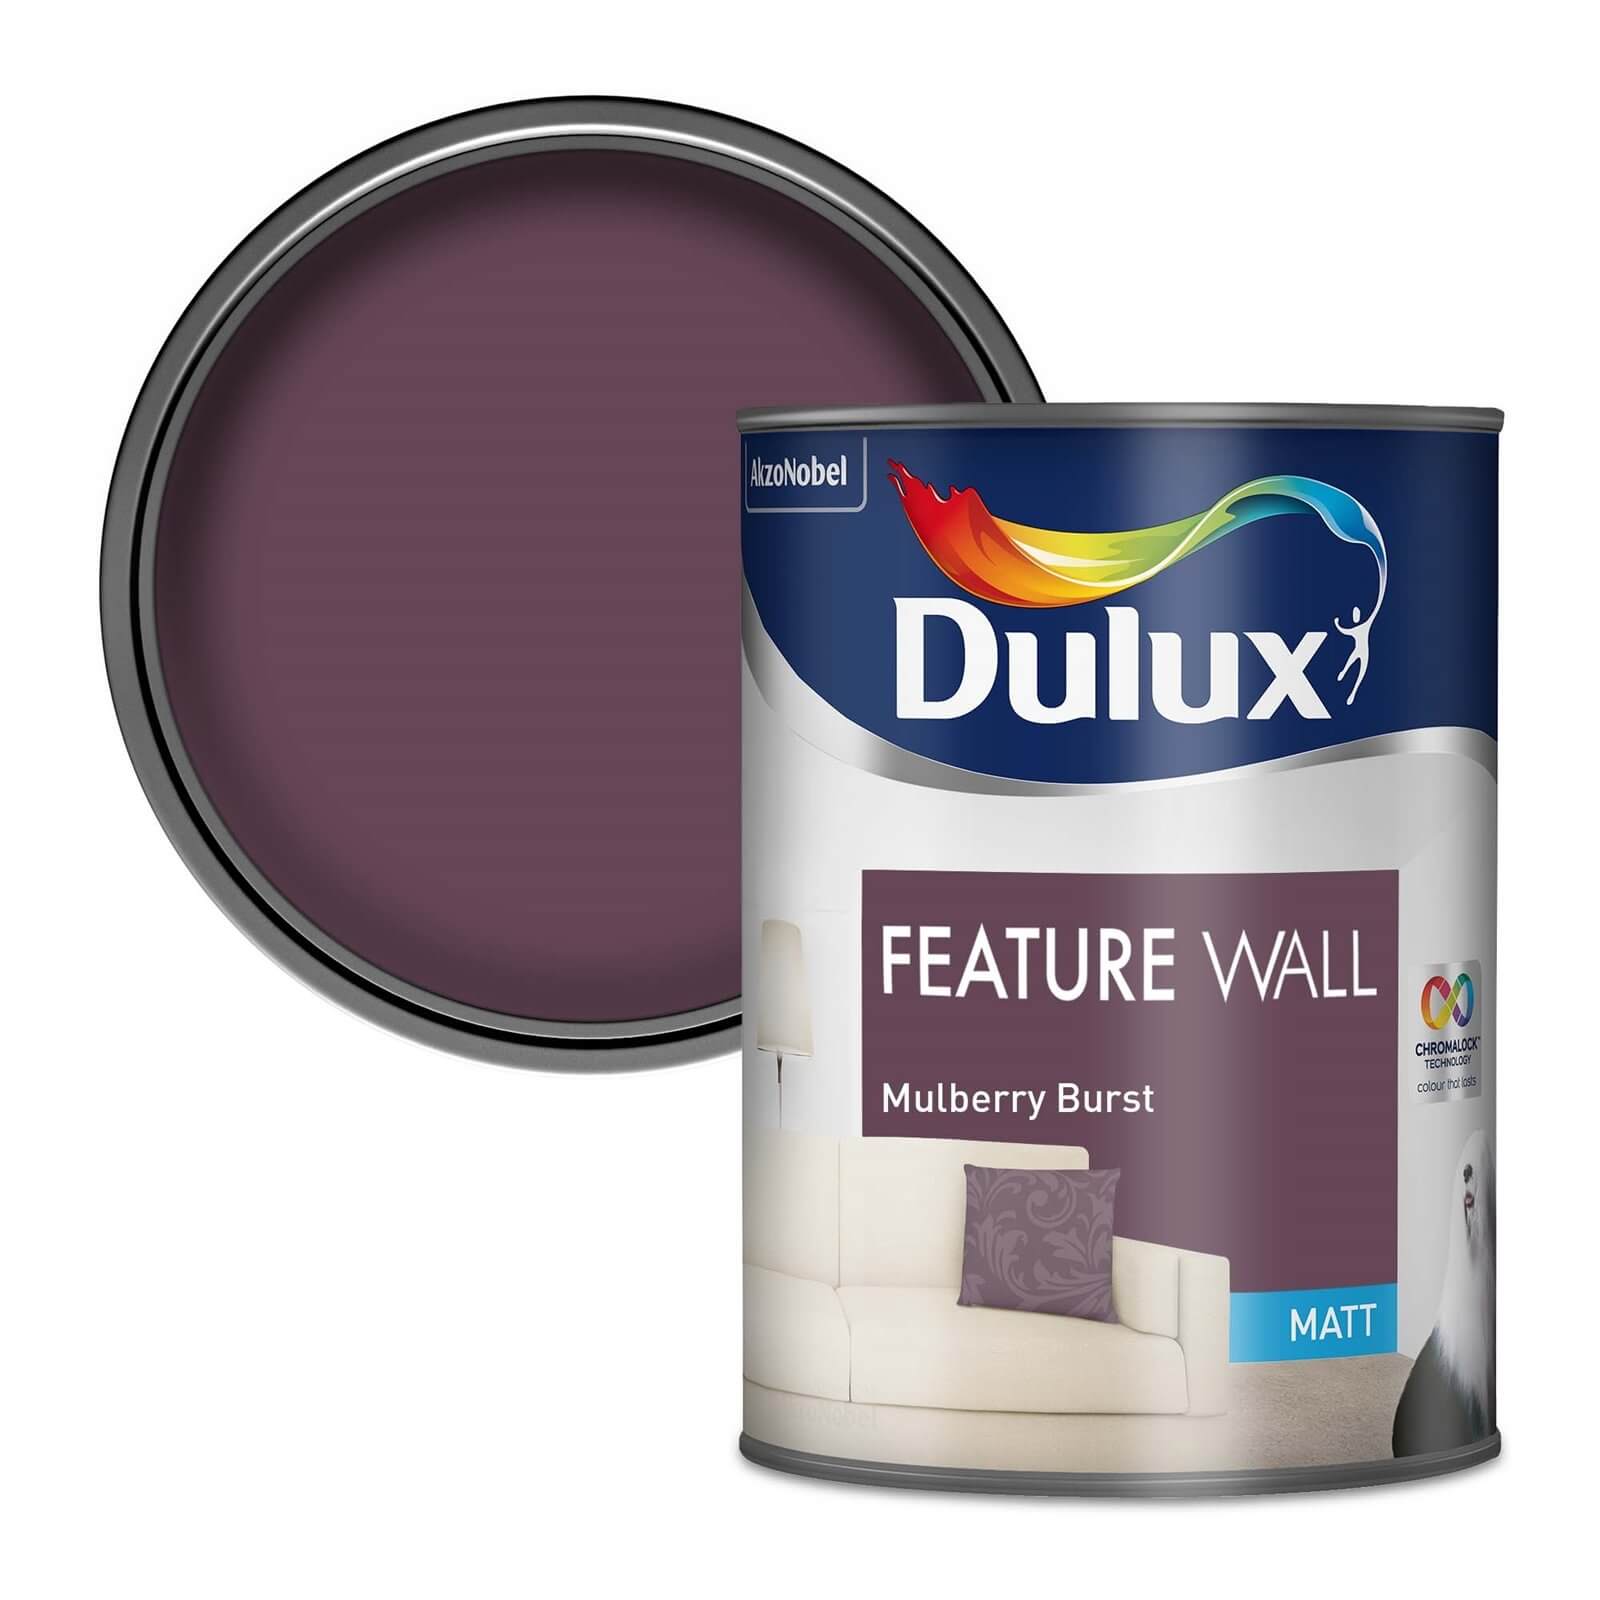 Dulux Feature Wall Mulberry Burst - Matt Emulsion Paint - 1.25L